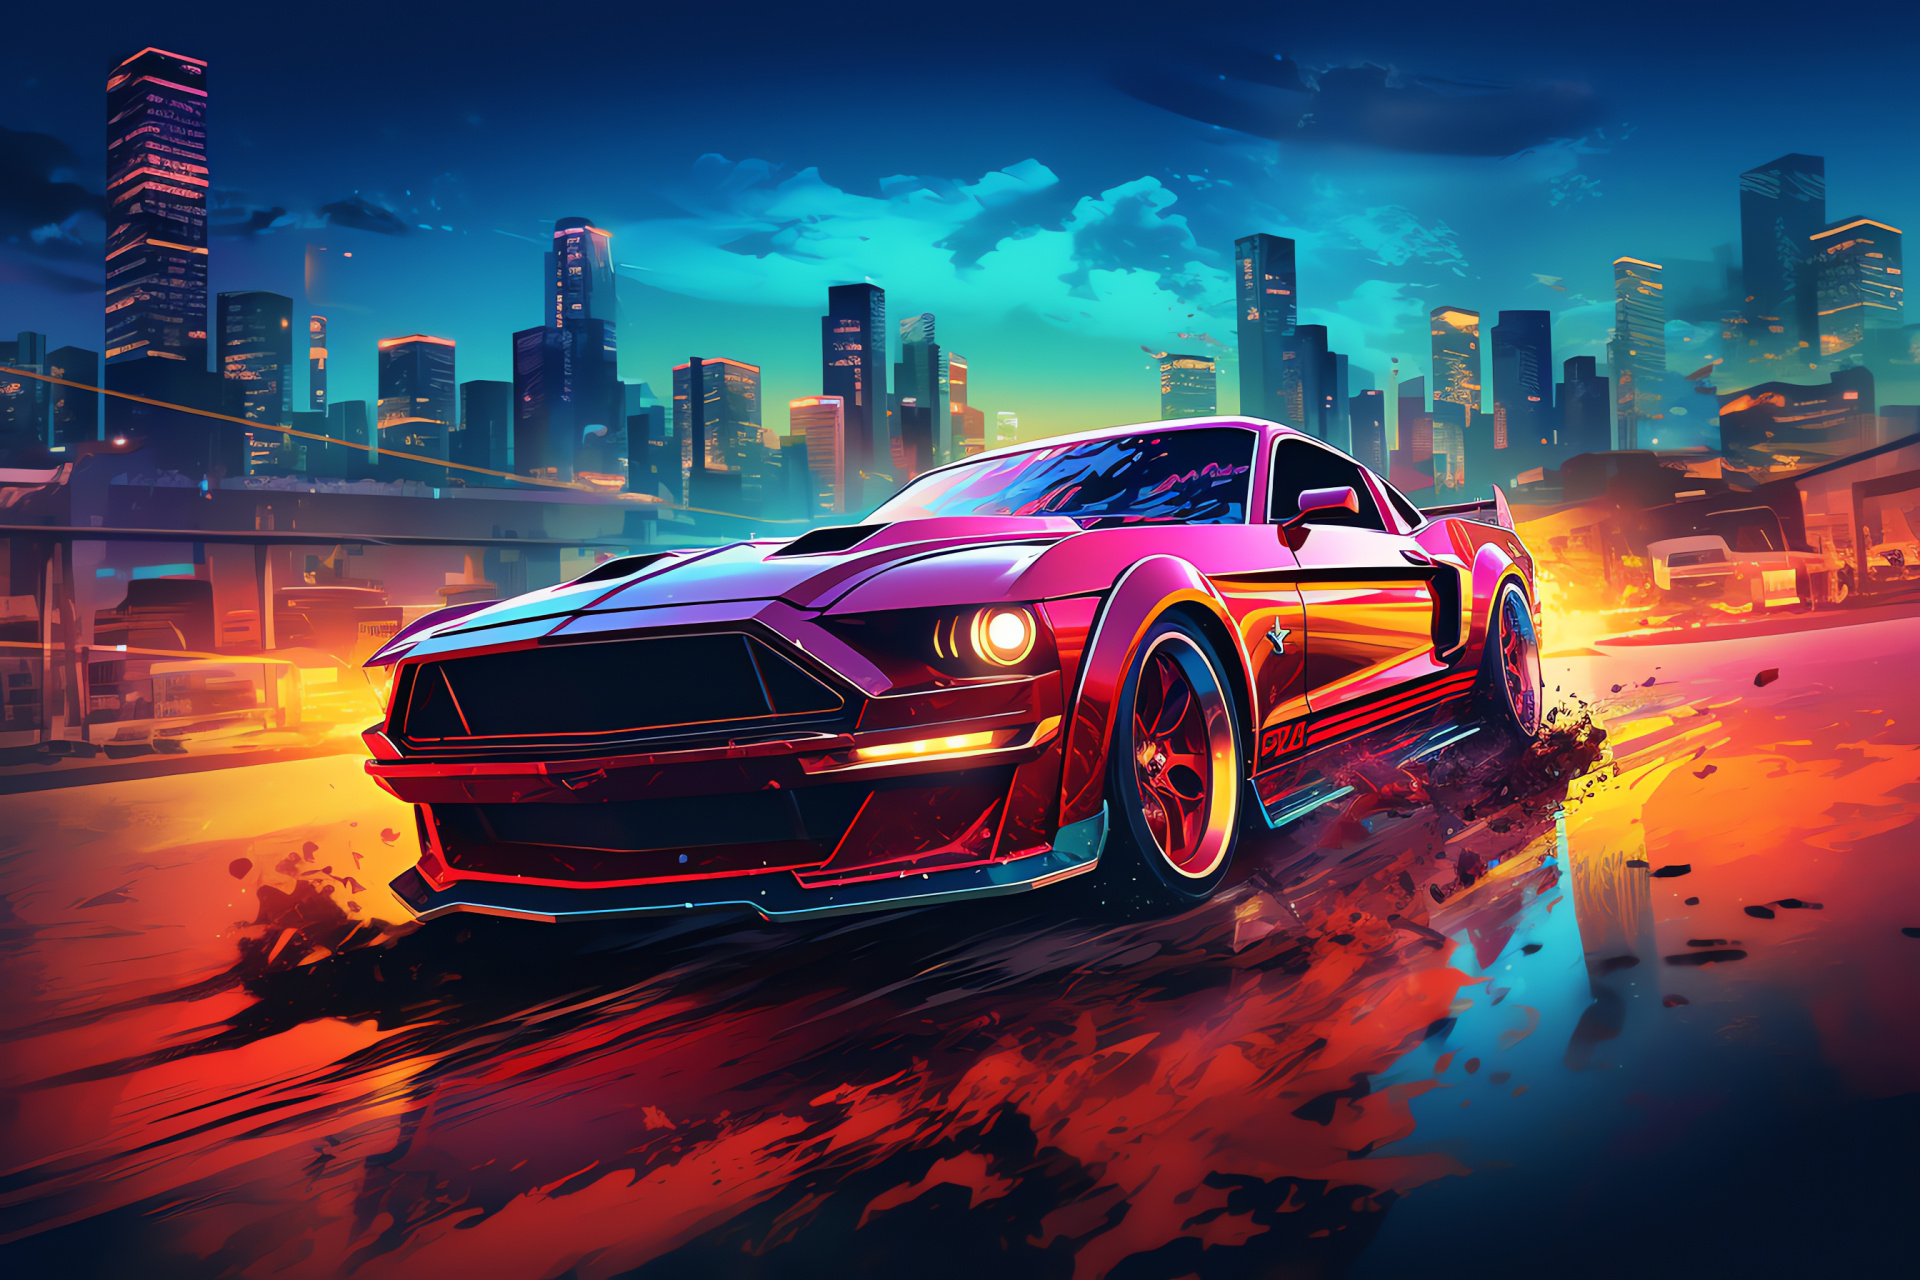 Iconic Mustang, broad perspective, dynamic terrain, light art, avant-garde city panorama, HD Desktop Image